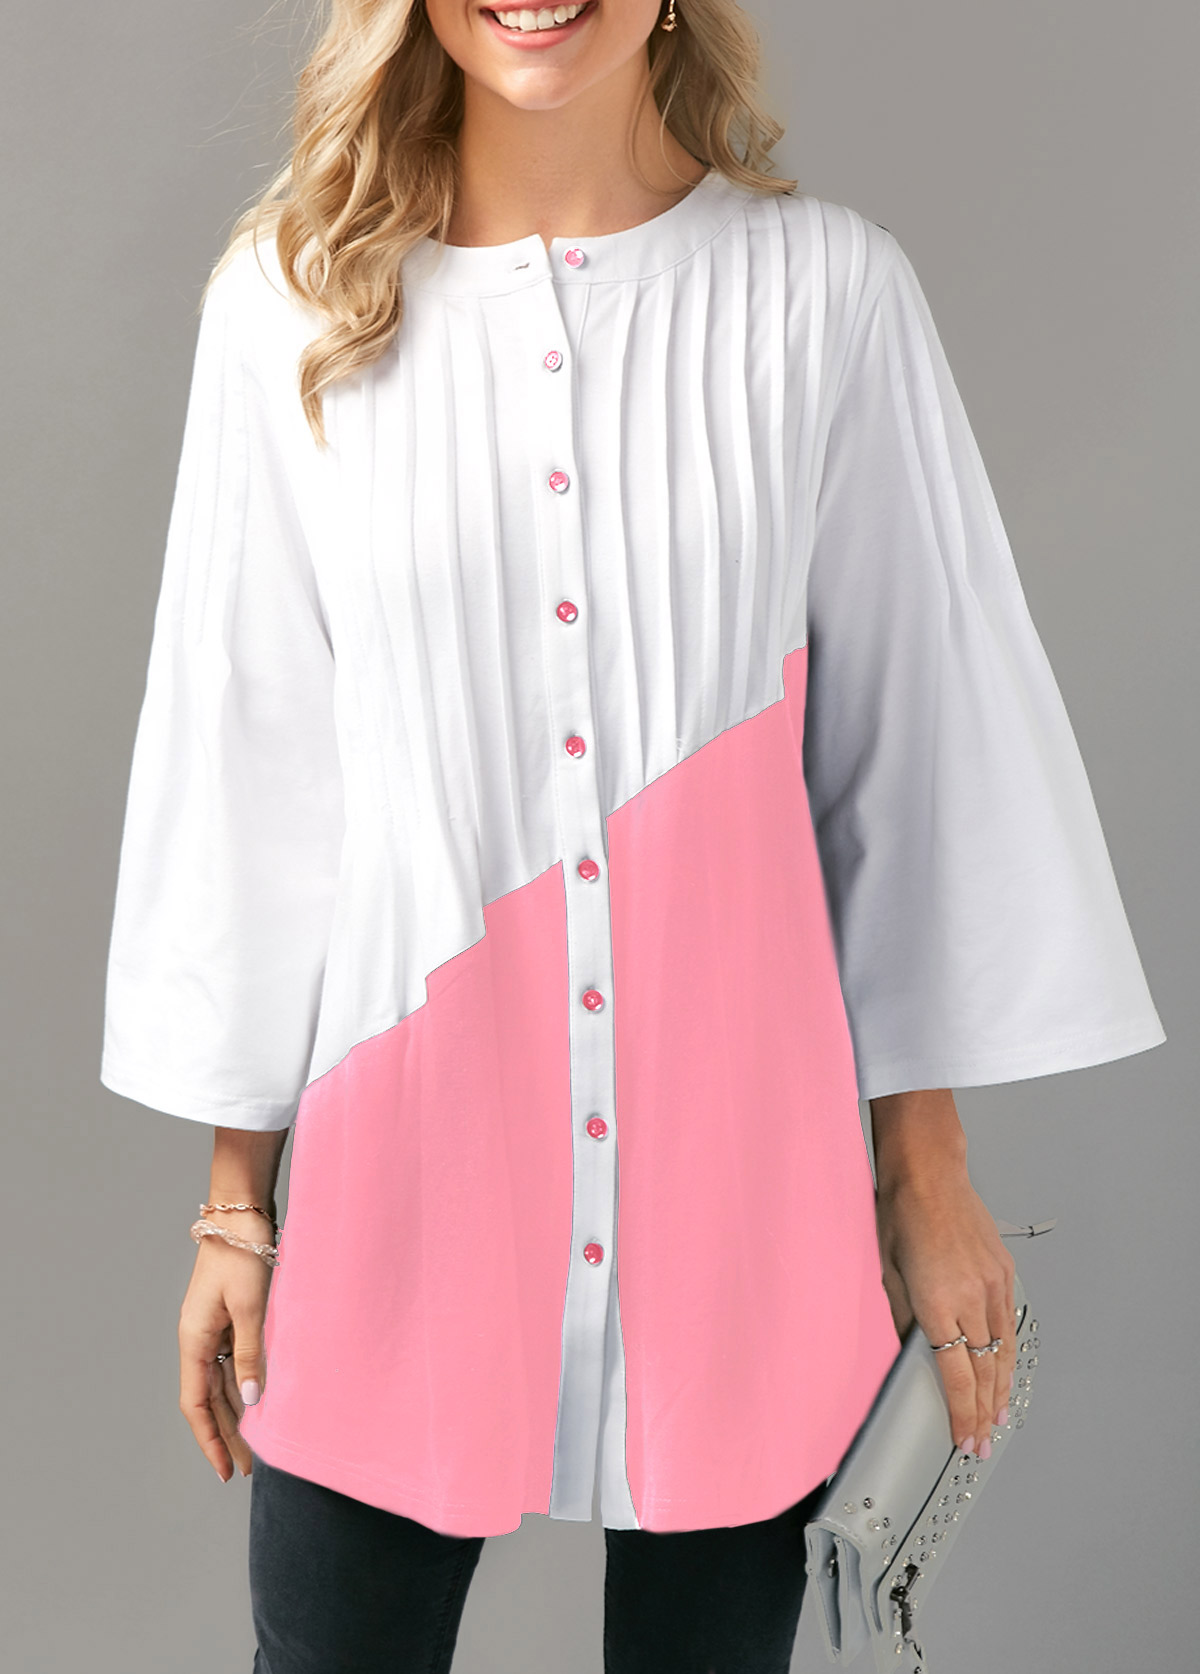 Stunning Pink & White Button Up Tunic Blouse - Fashion Design Store